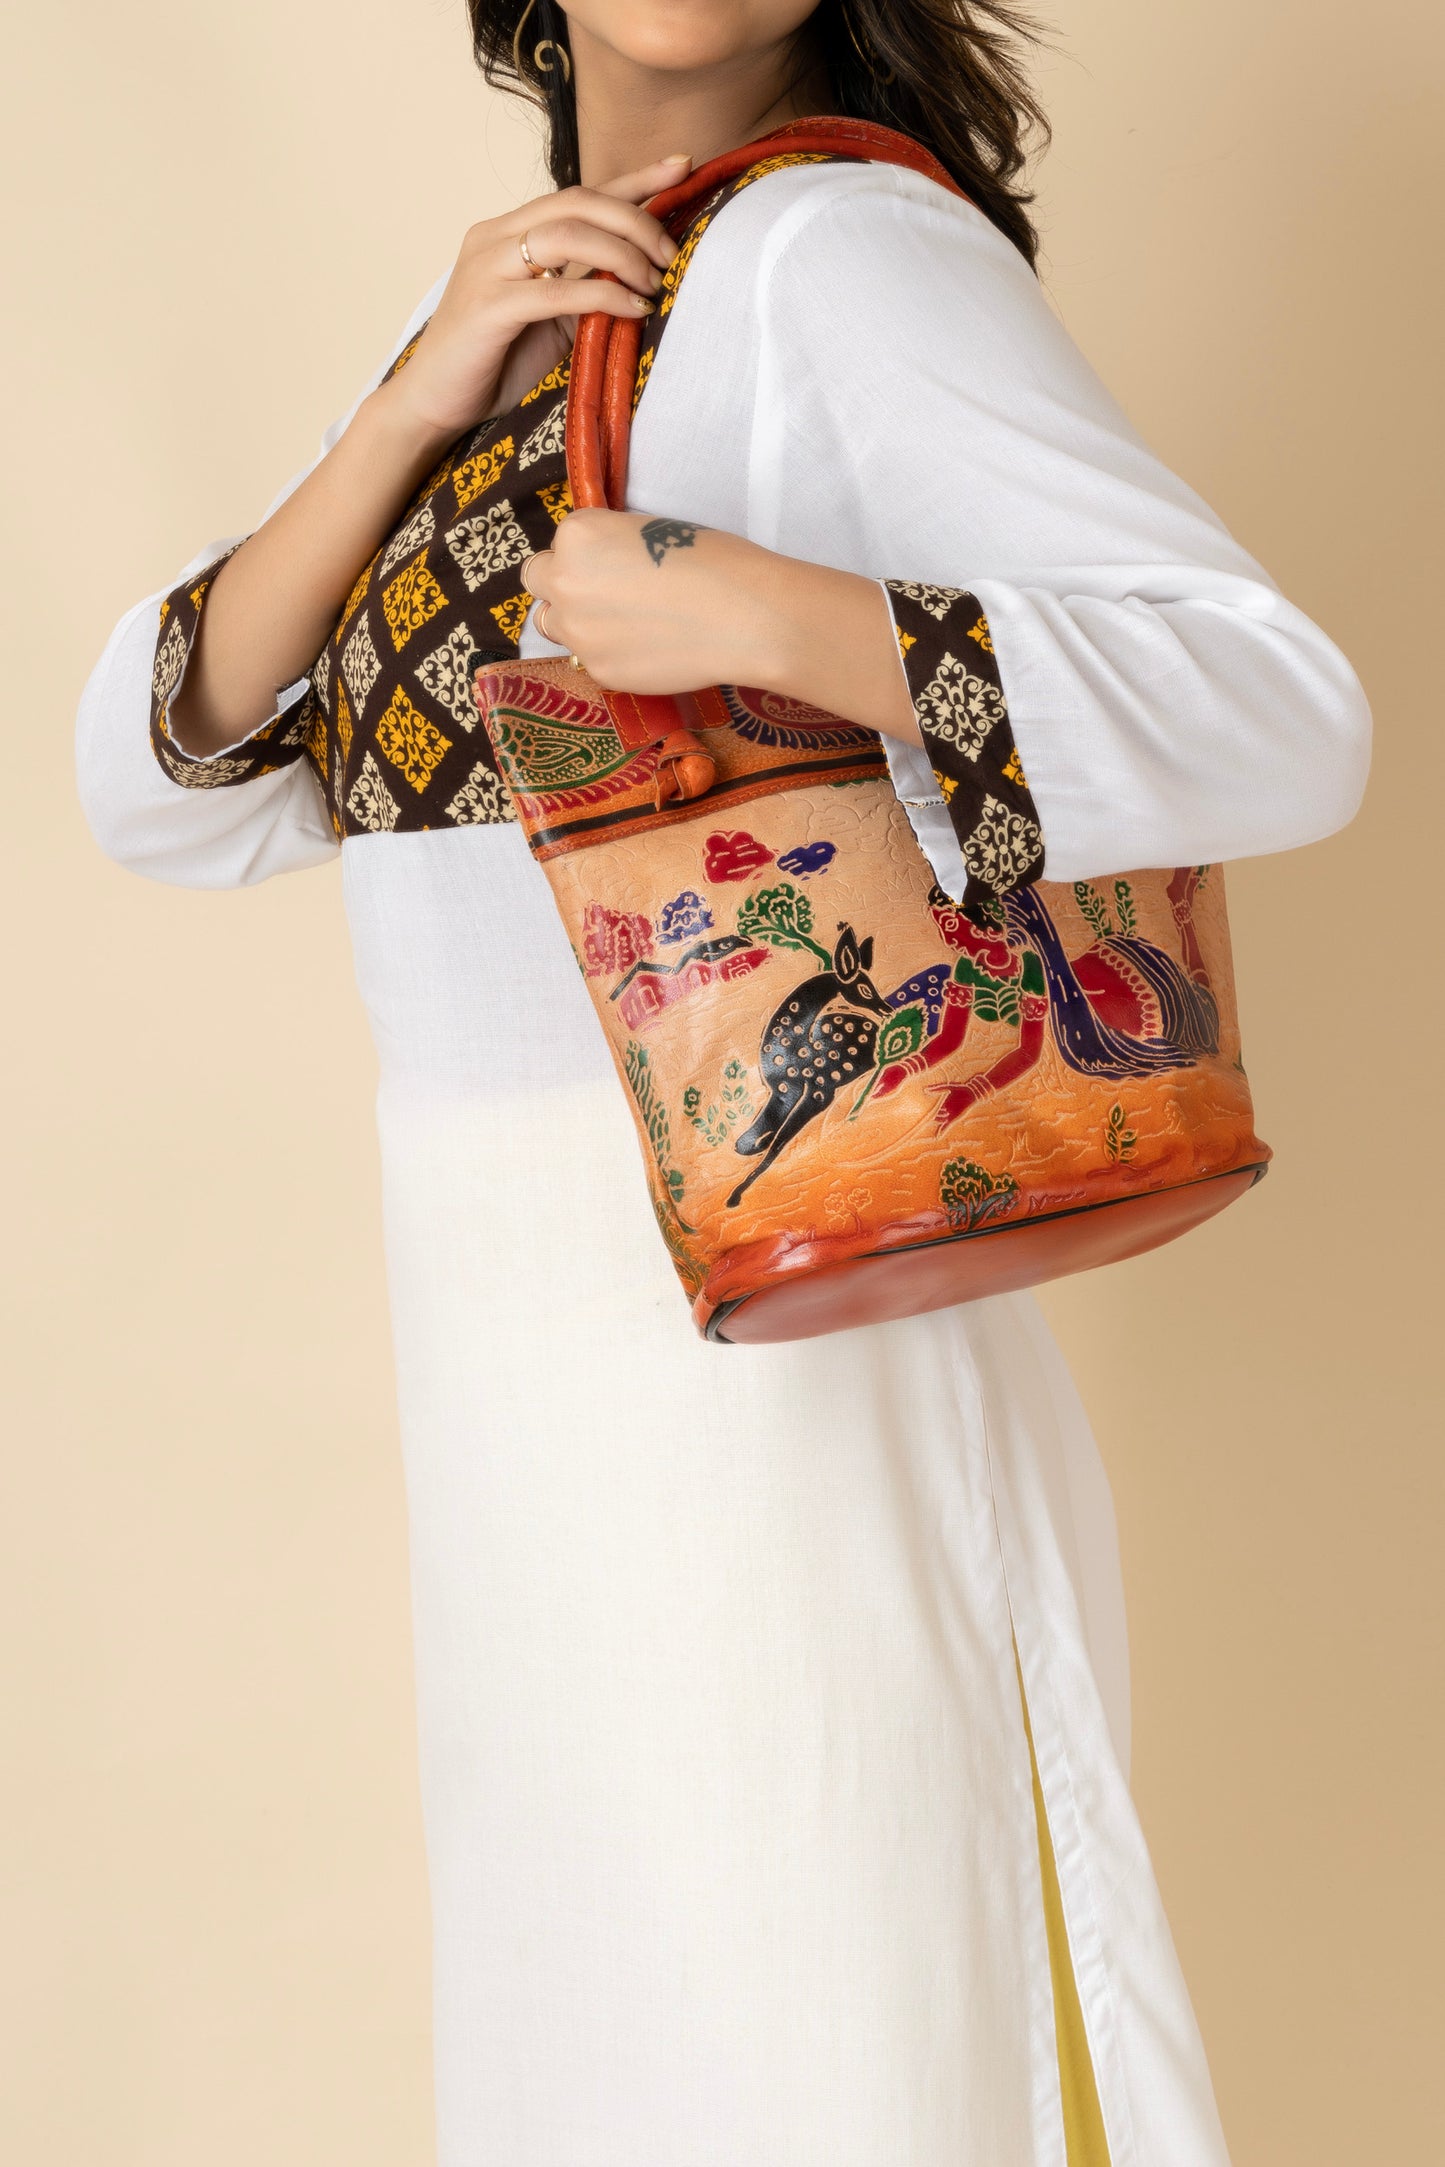 shantiniketan-leather-traditional-printed-brown-handbag-10-11-for-women-hb04